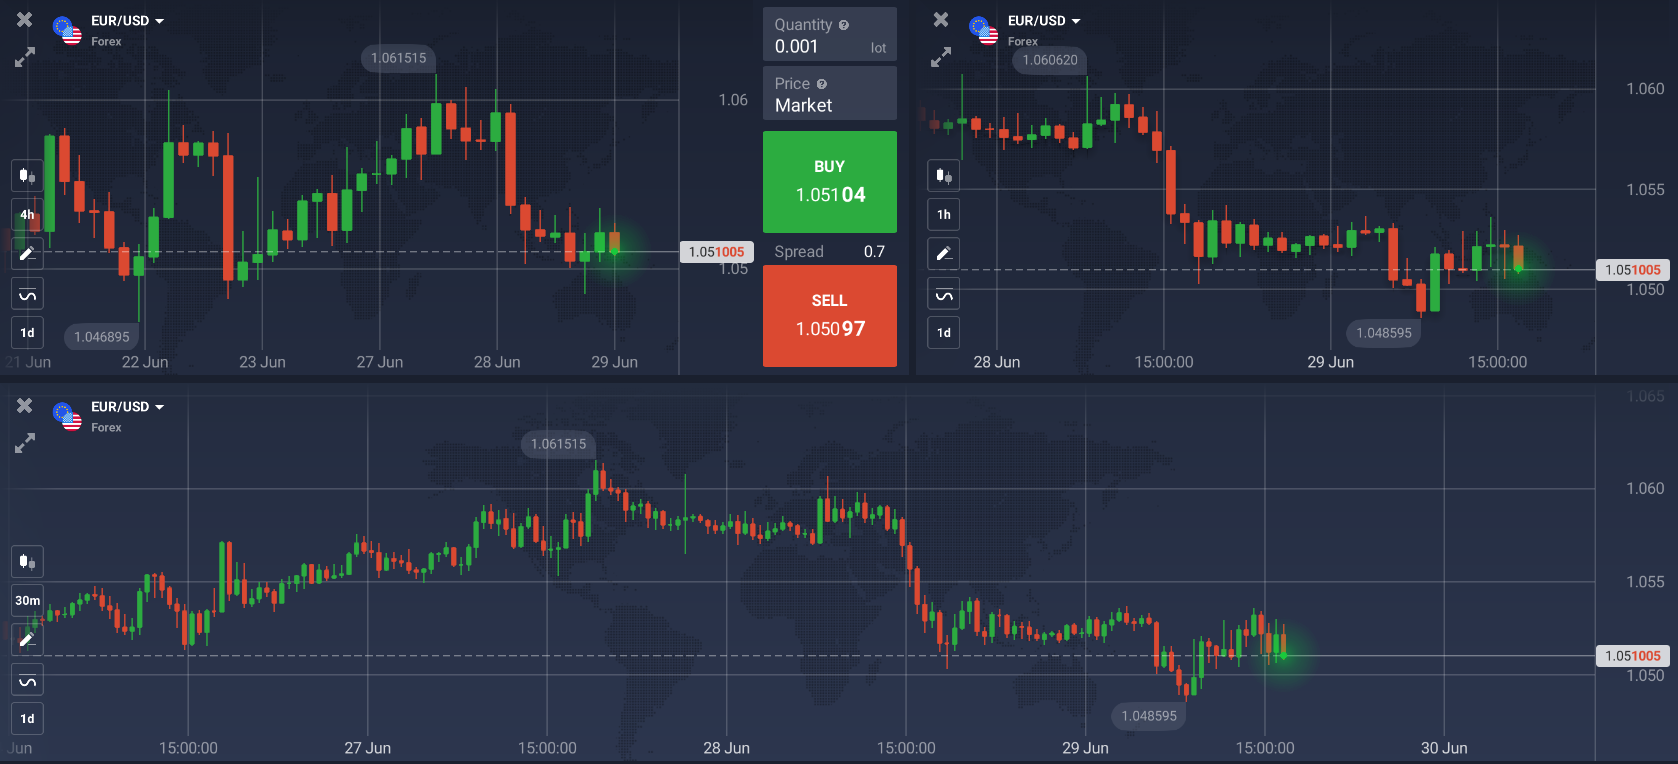 IQ Option’s web trader platform